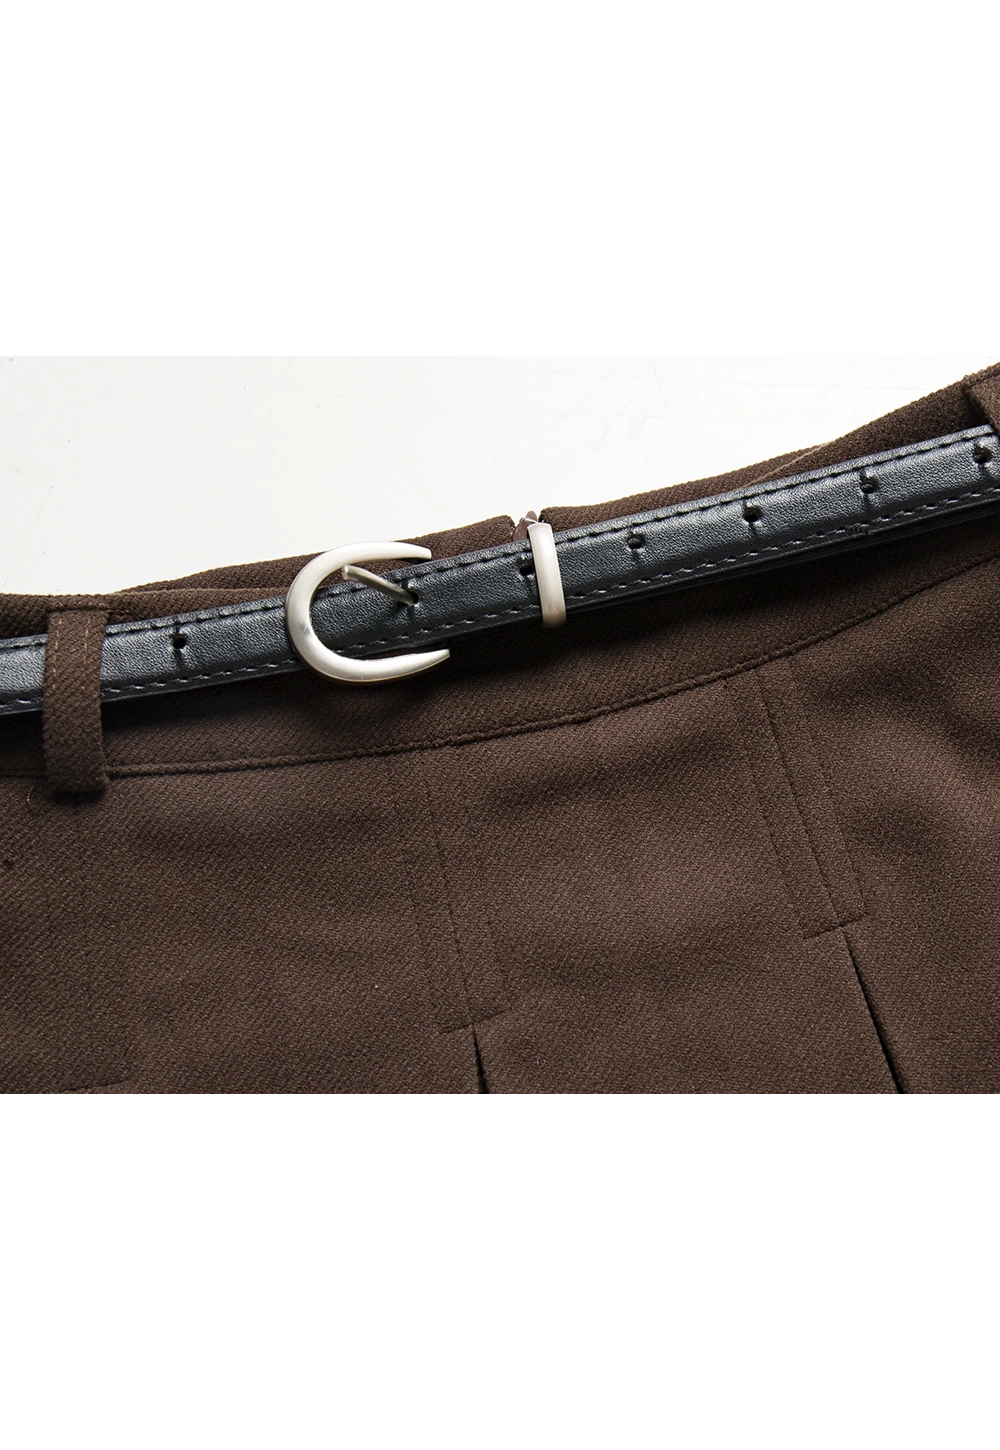 Women's Pleated Midi Skirt with Belt